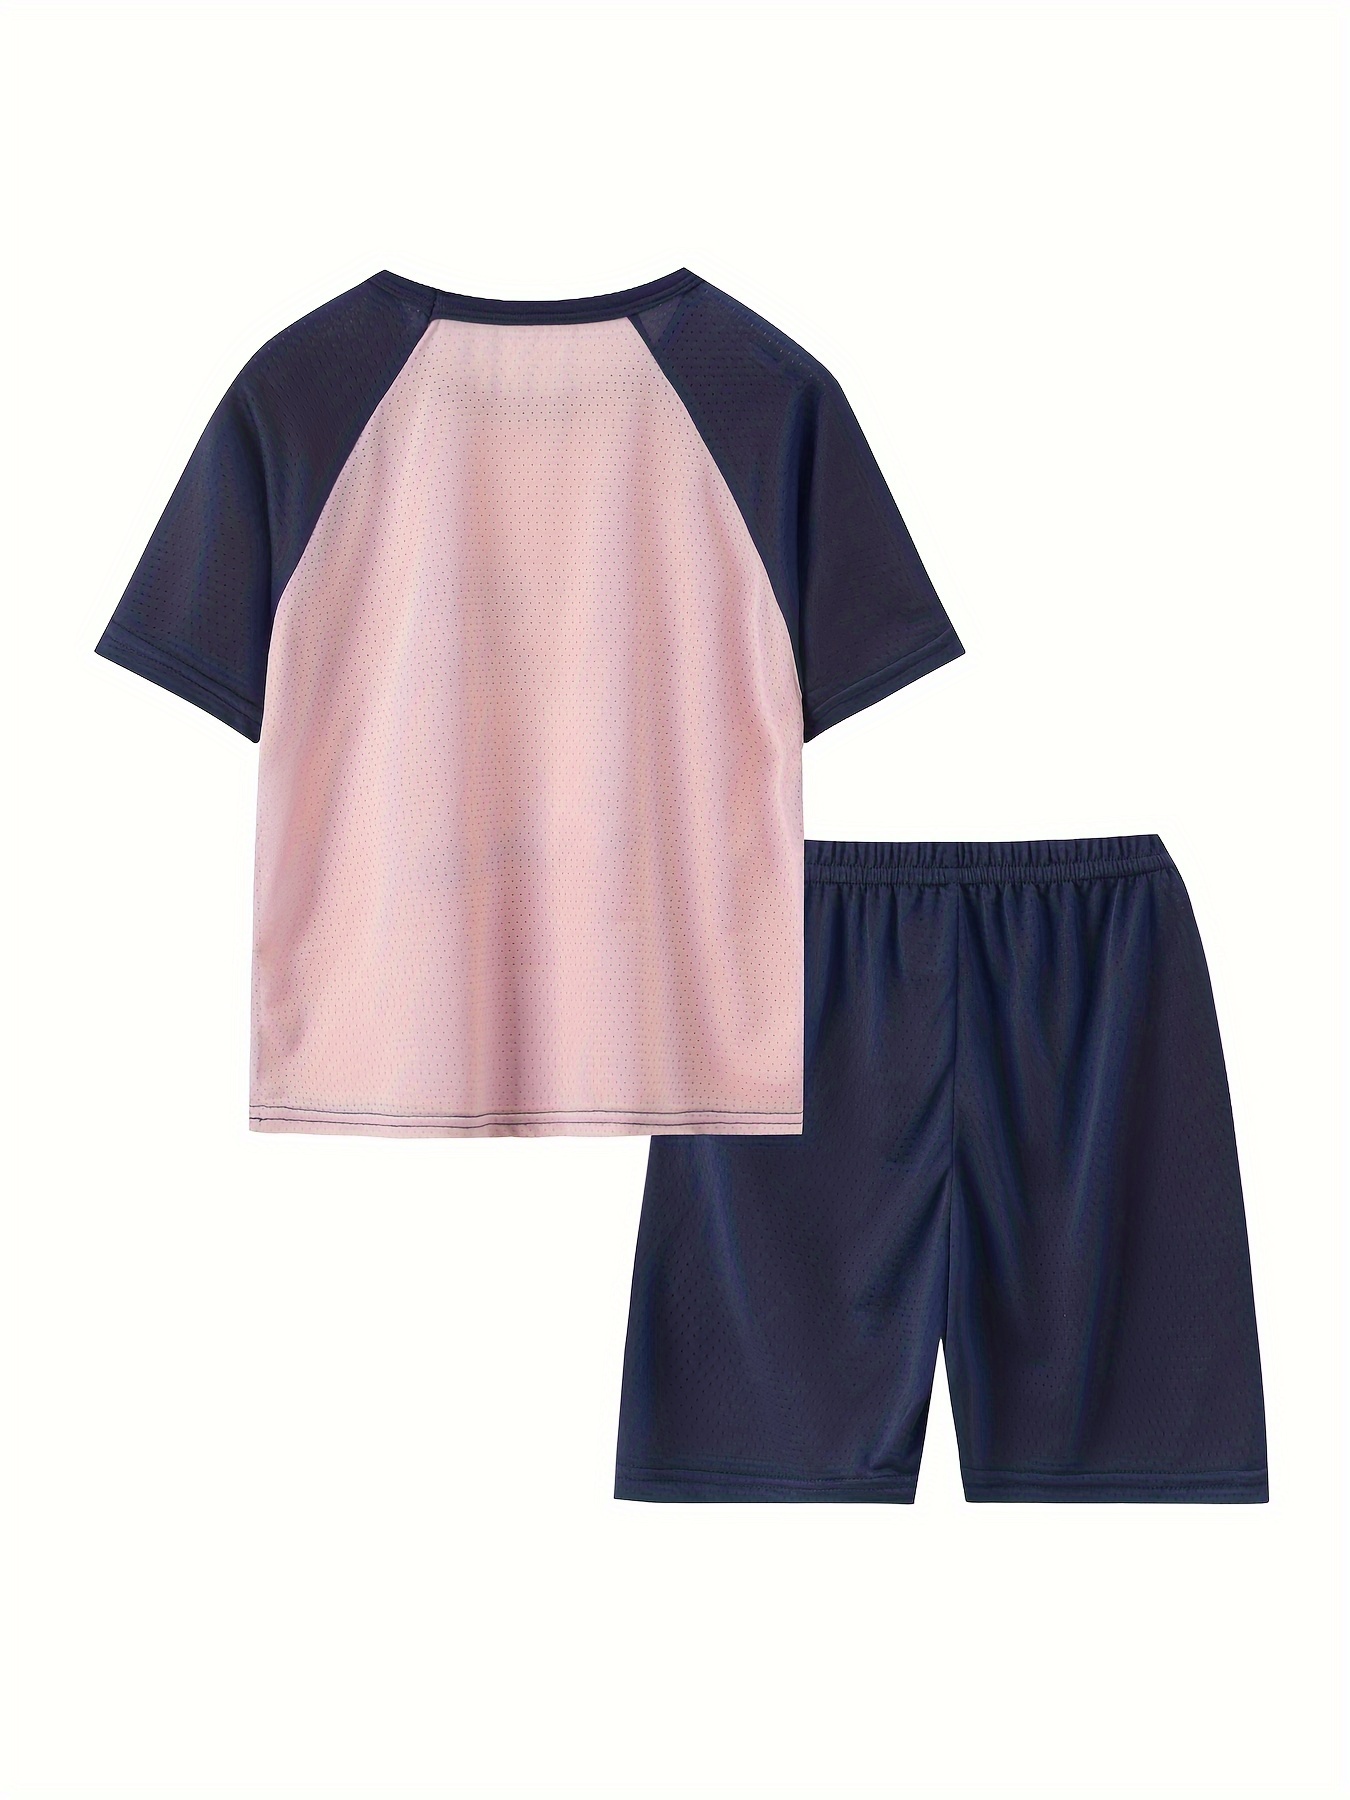 Kids Sleepwear Outfit Silky Short Sleeve T-shirt Shorts Nightgown